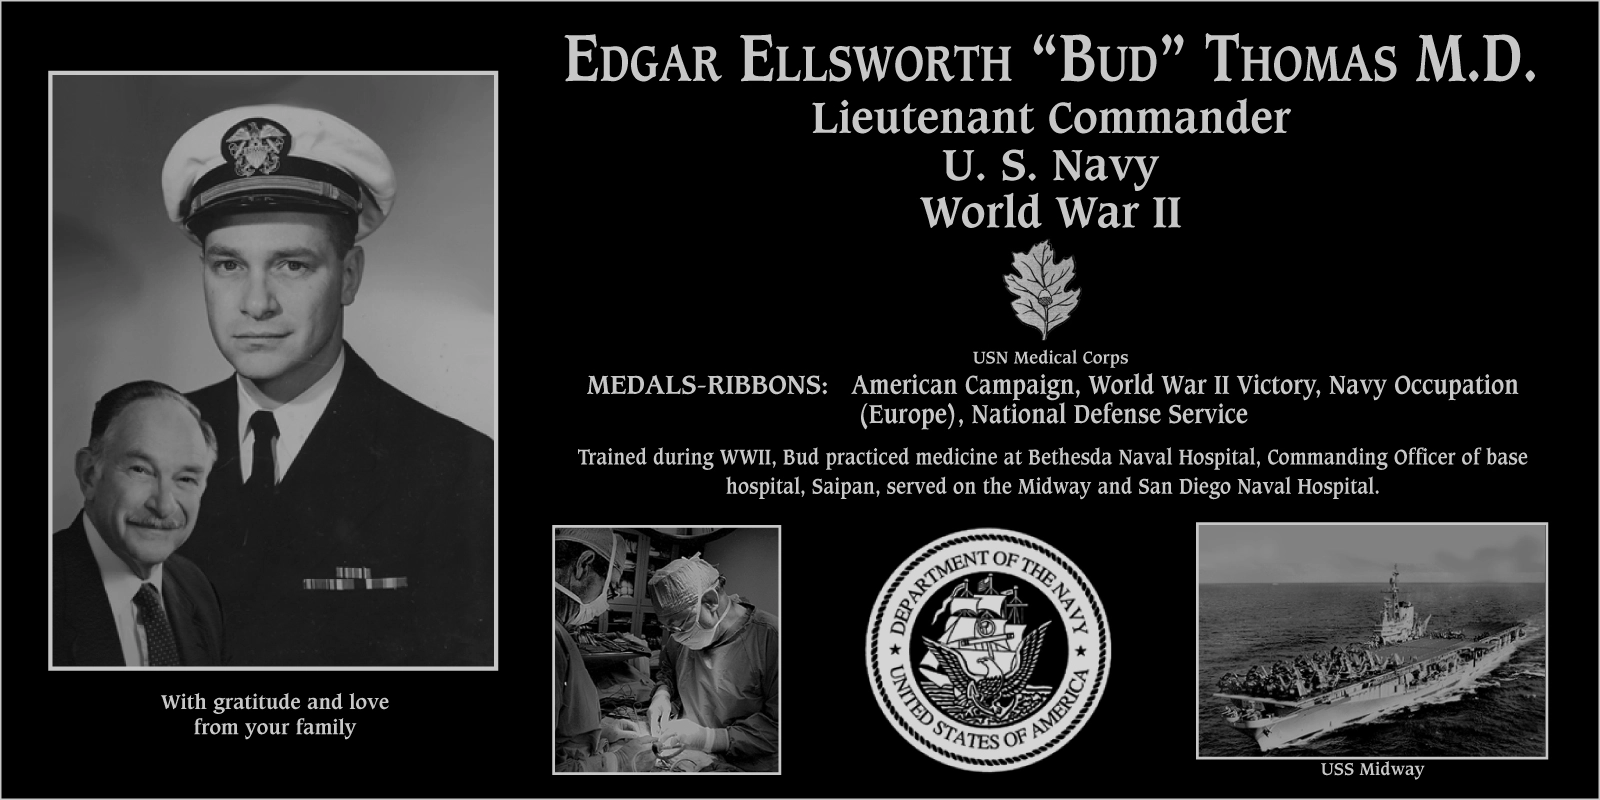 Edgar Ellesworth “Bud” Thomas